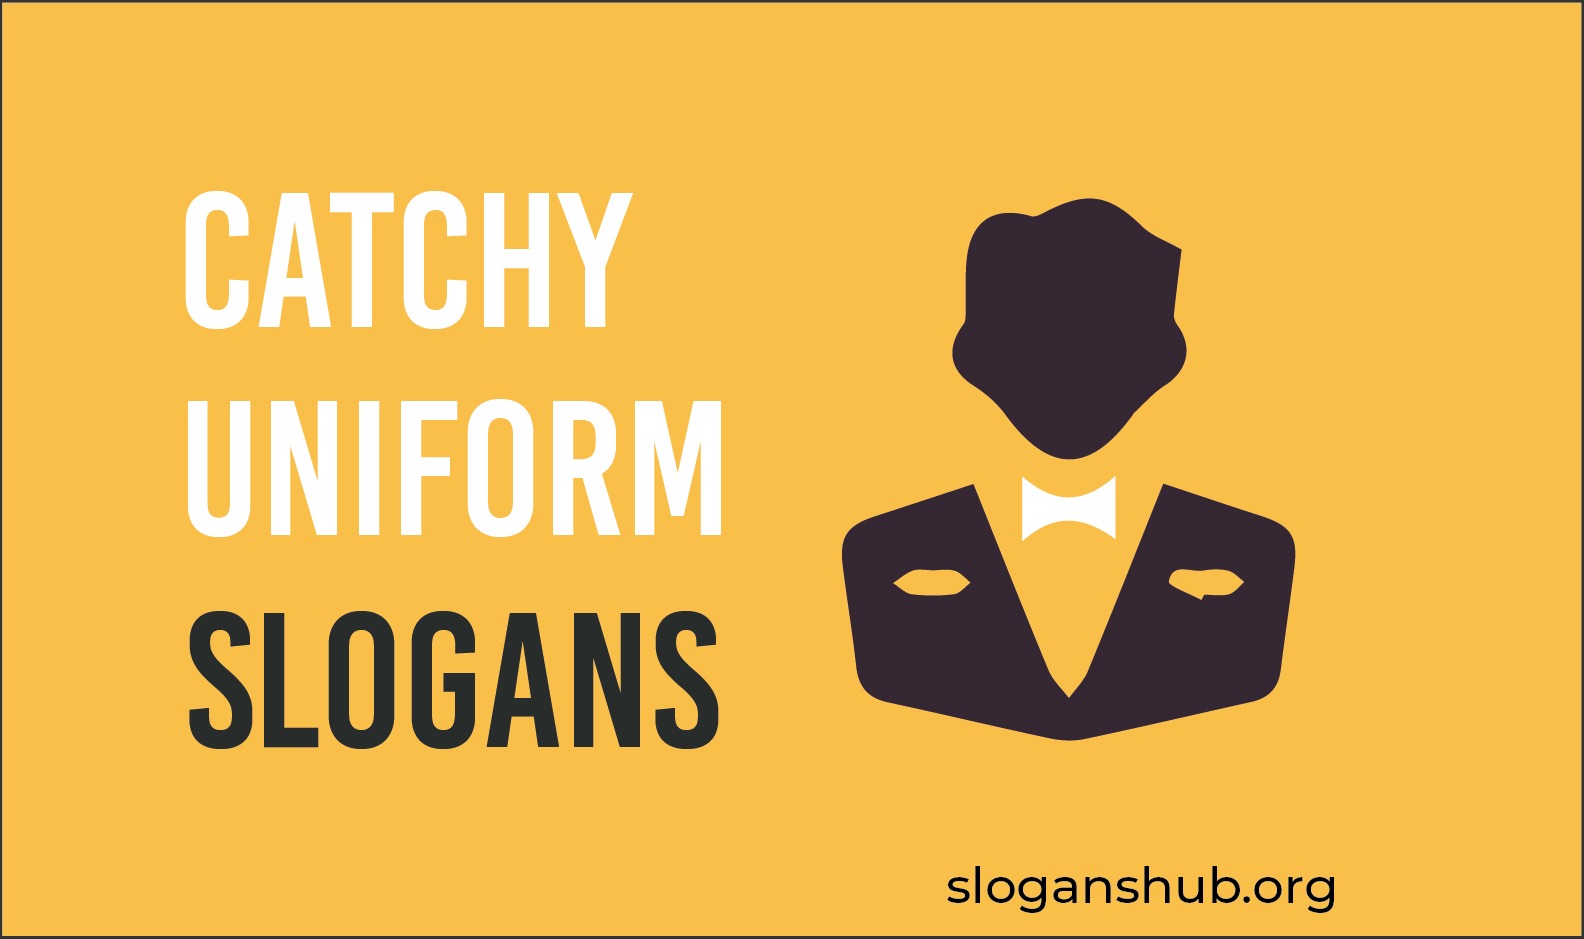 35 Catchy Uniform Slogans and Taglines